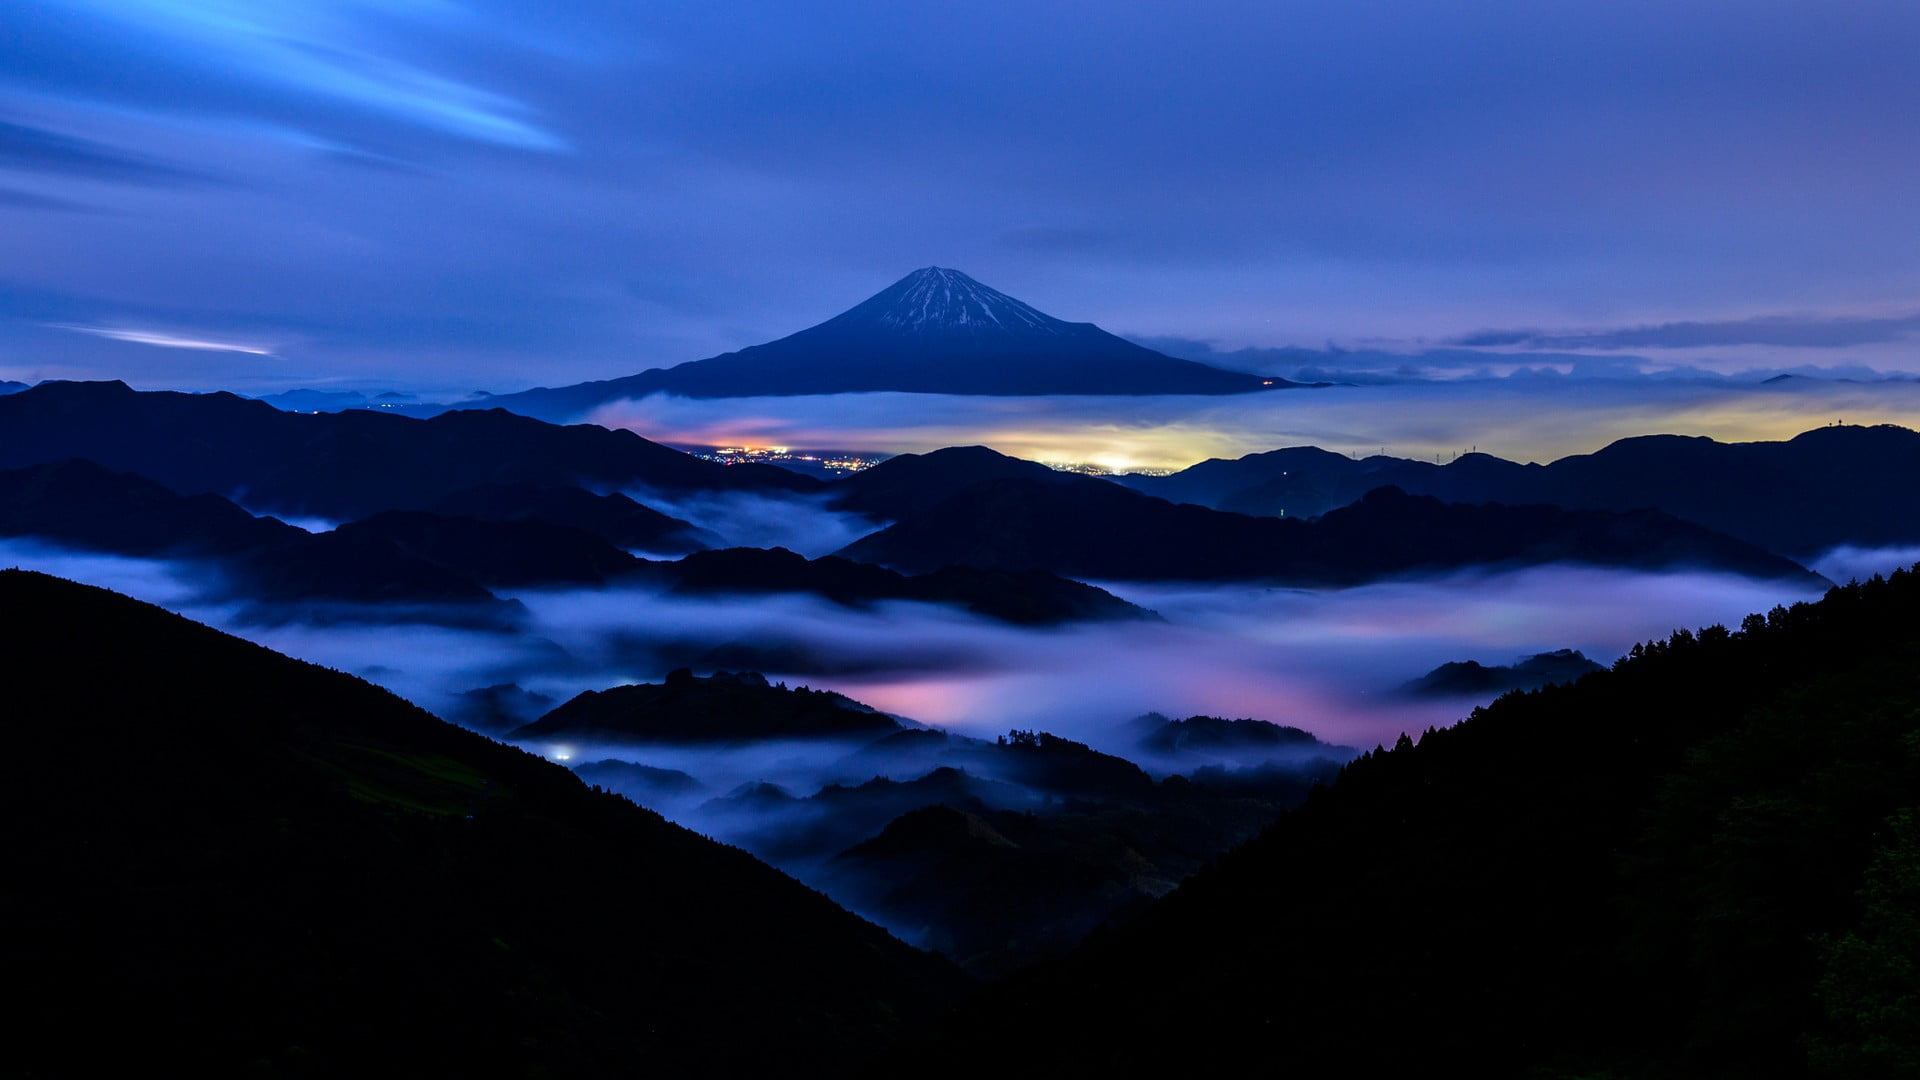 silhouette of mountain, nature, landscape, mountains, Mount Fuji